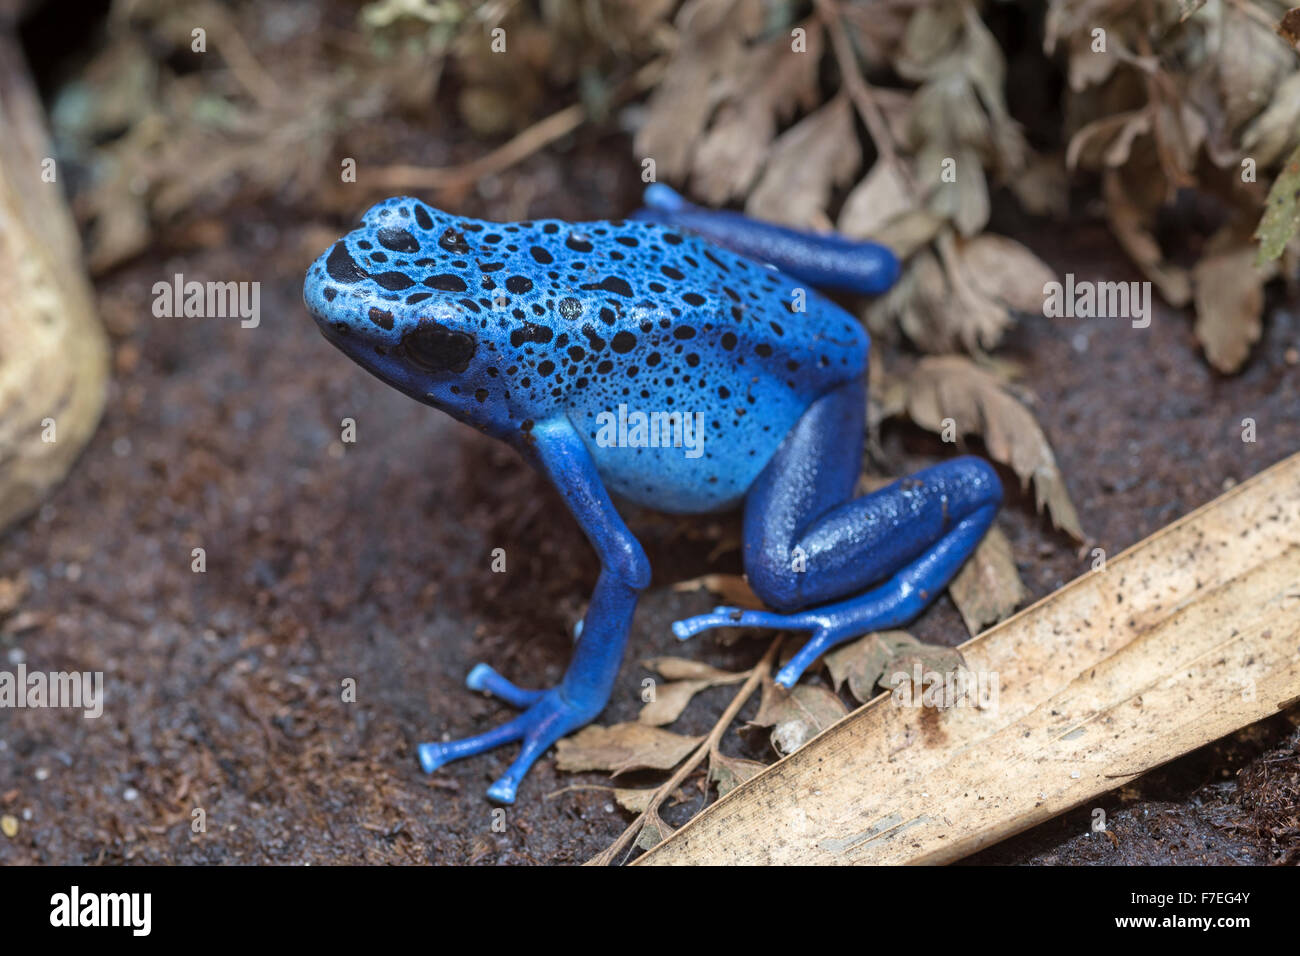 Blue poison-dart frog Stock Photo